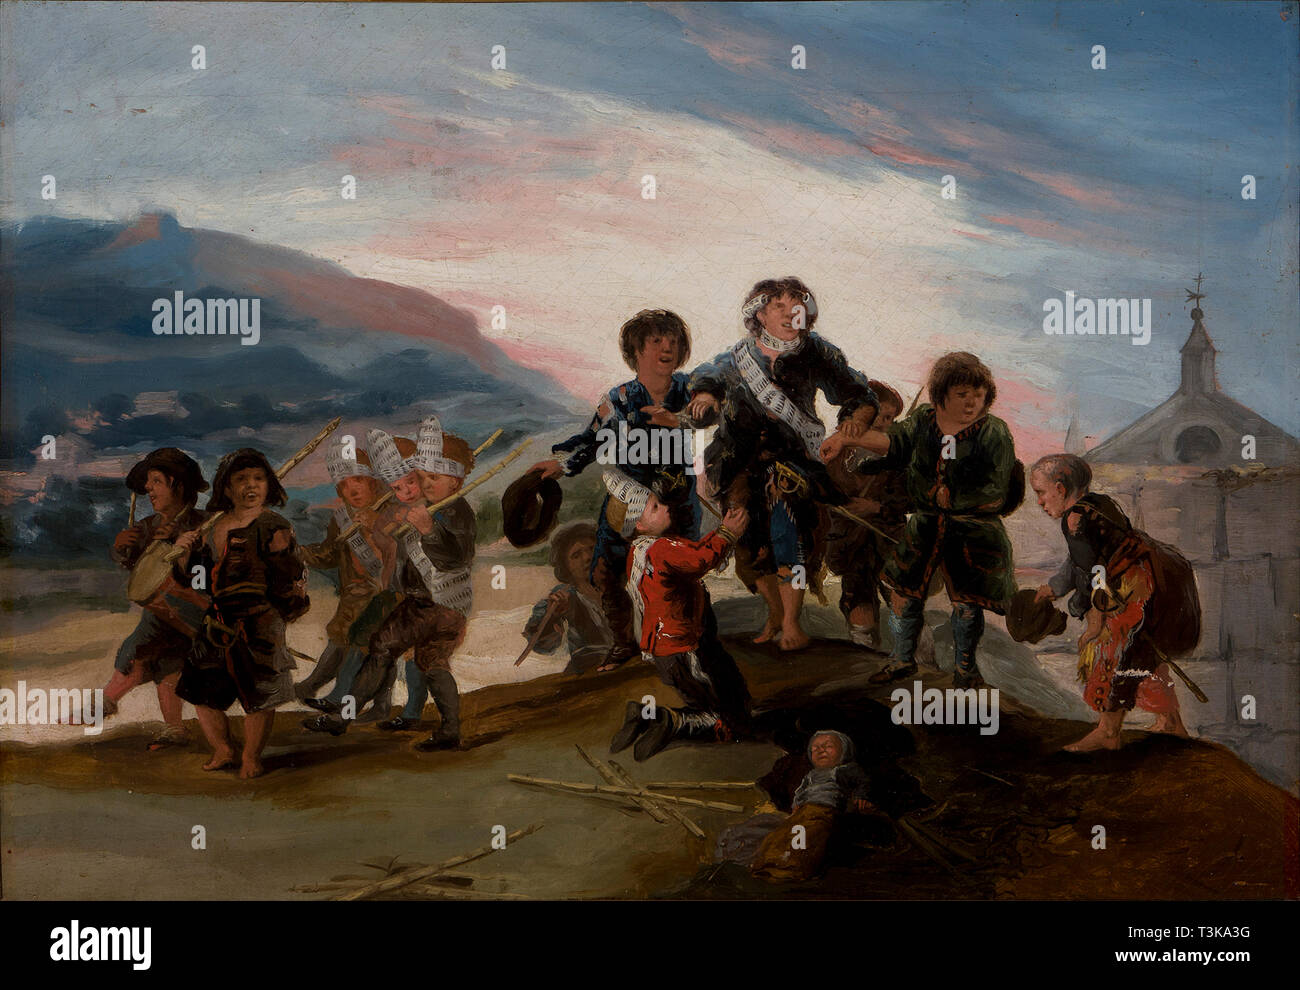 Enfants jouant des soldats (Niños soldados jugando un), 1786. Organisateur : Goya, Francisco de (1746-1828). Banque D'Images